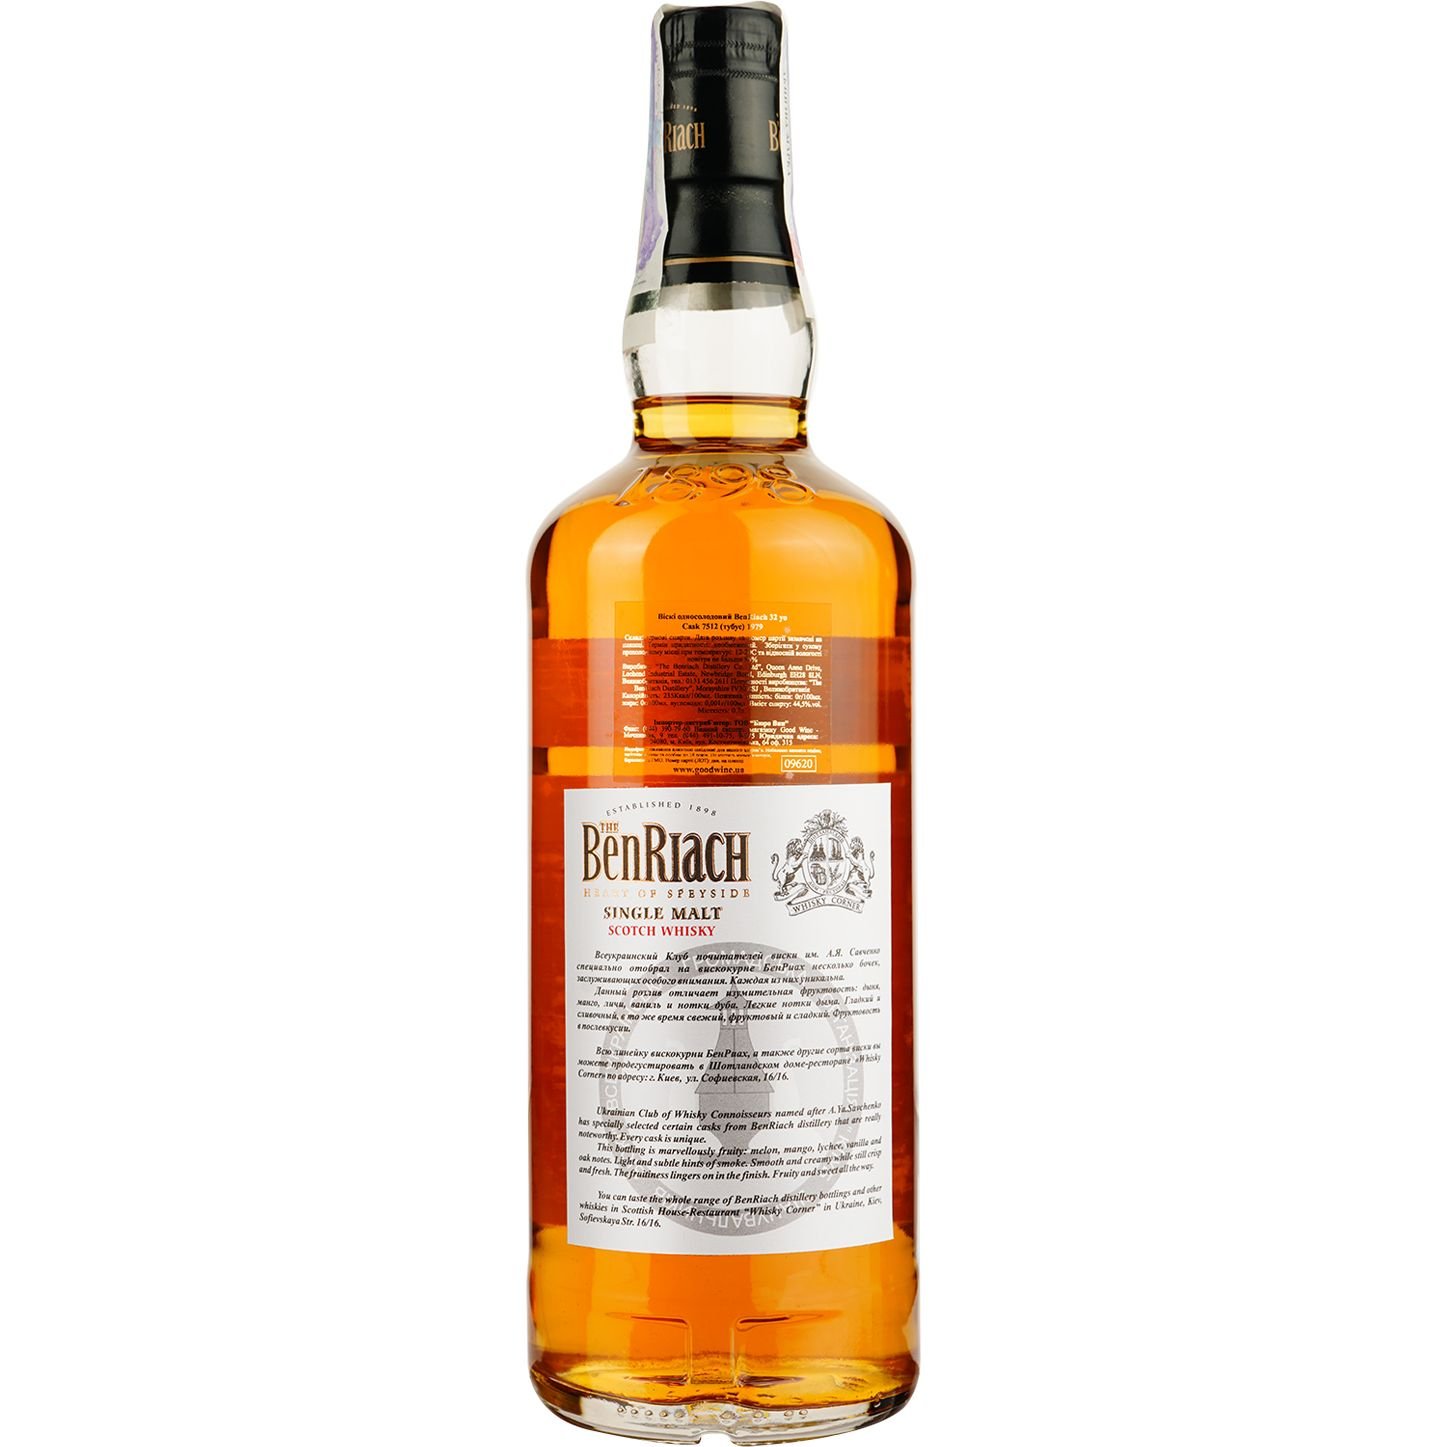 Виски BenRiach 32 Years Old Refill Bourbon Barrel Cask 7512 Single Malt Scotch Whisky, в подарочной упаковке, 44,5%, 0,7 л - фото 3